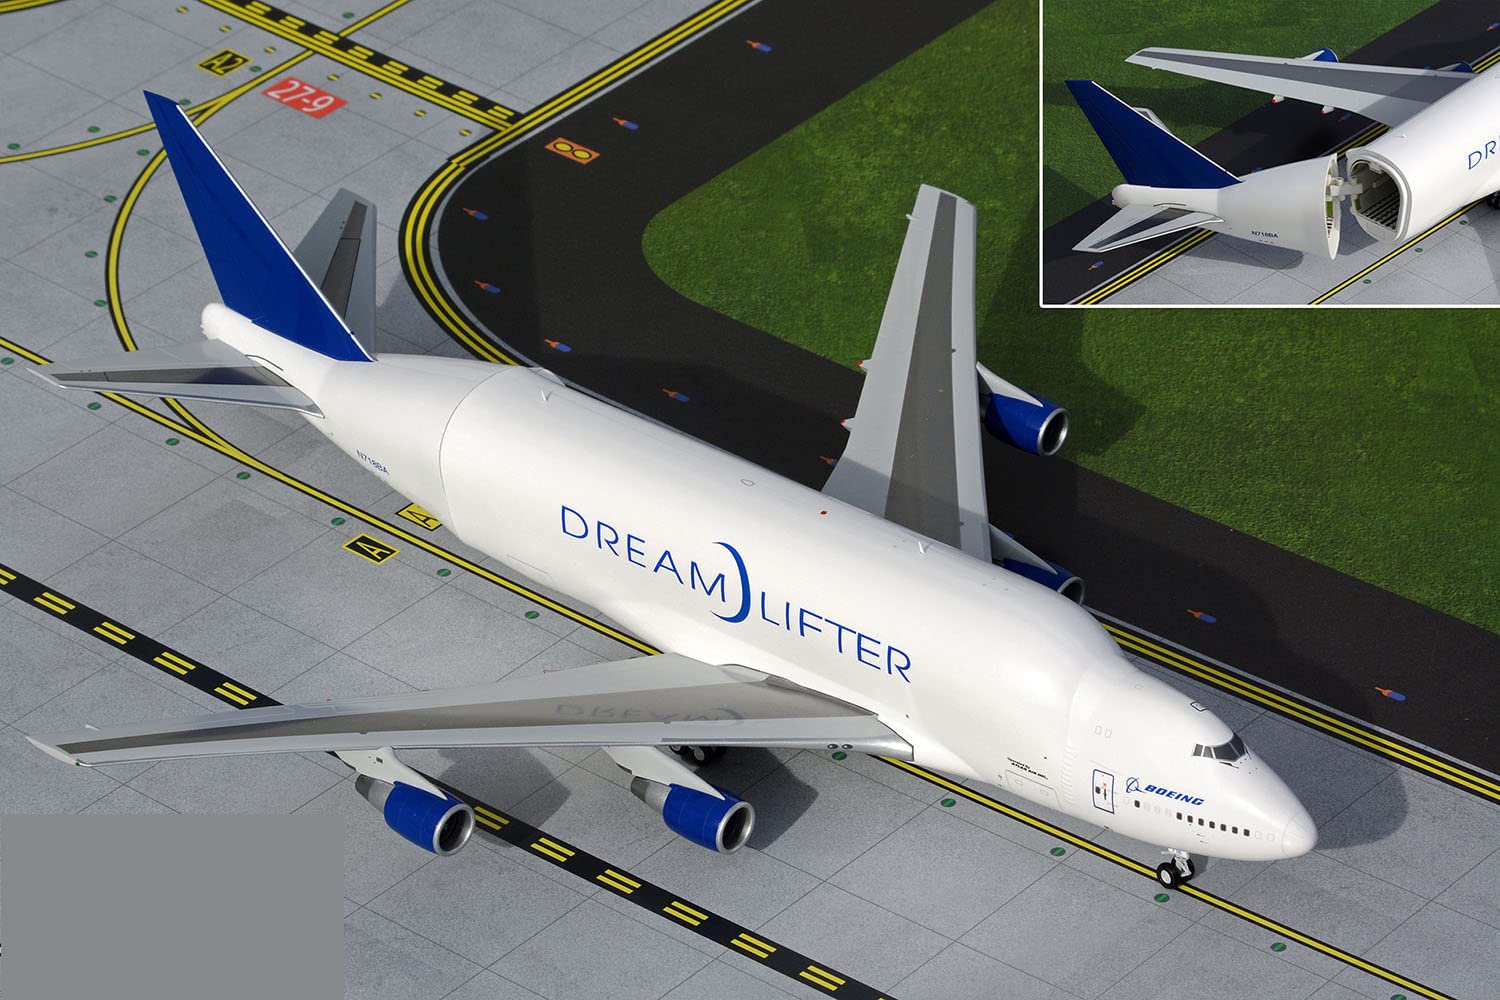 Boeing 747 Dreamlifter Wallpapers